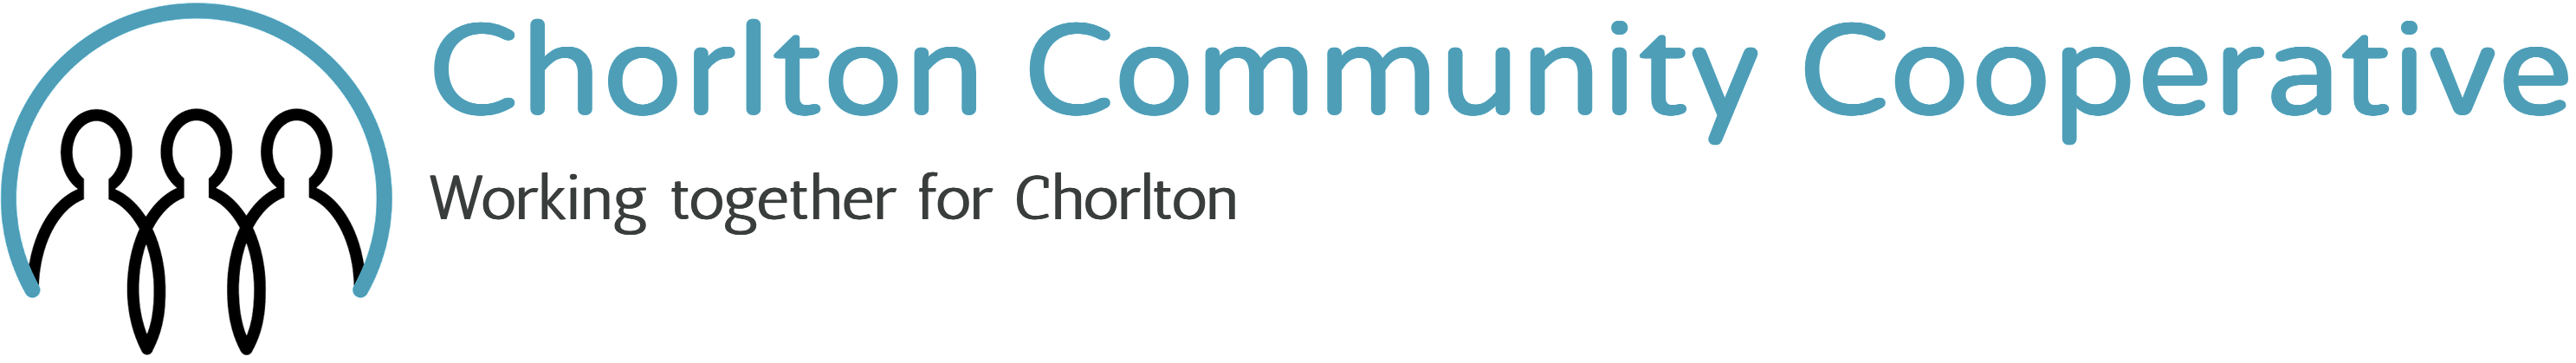 Chorlton Community Cooperative